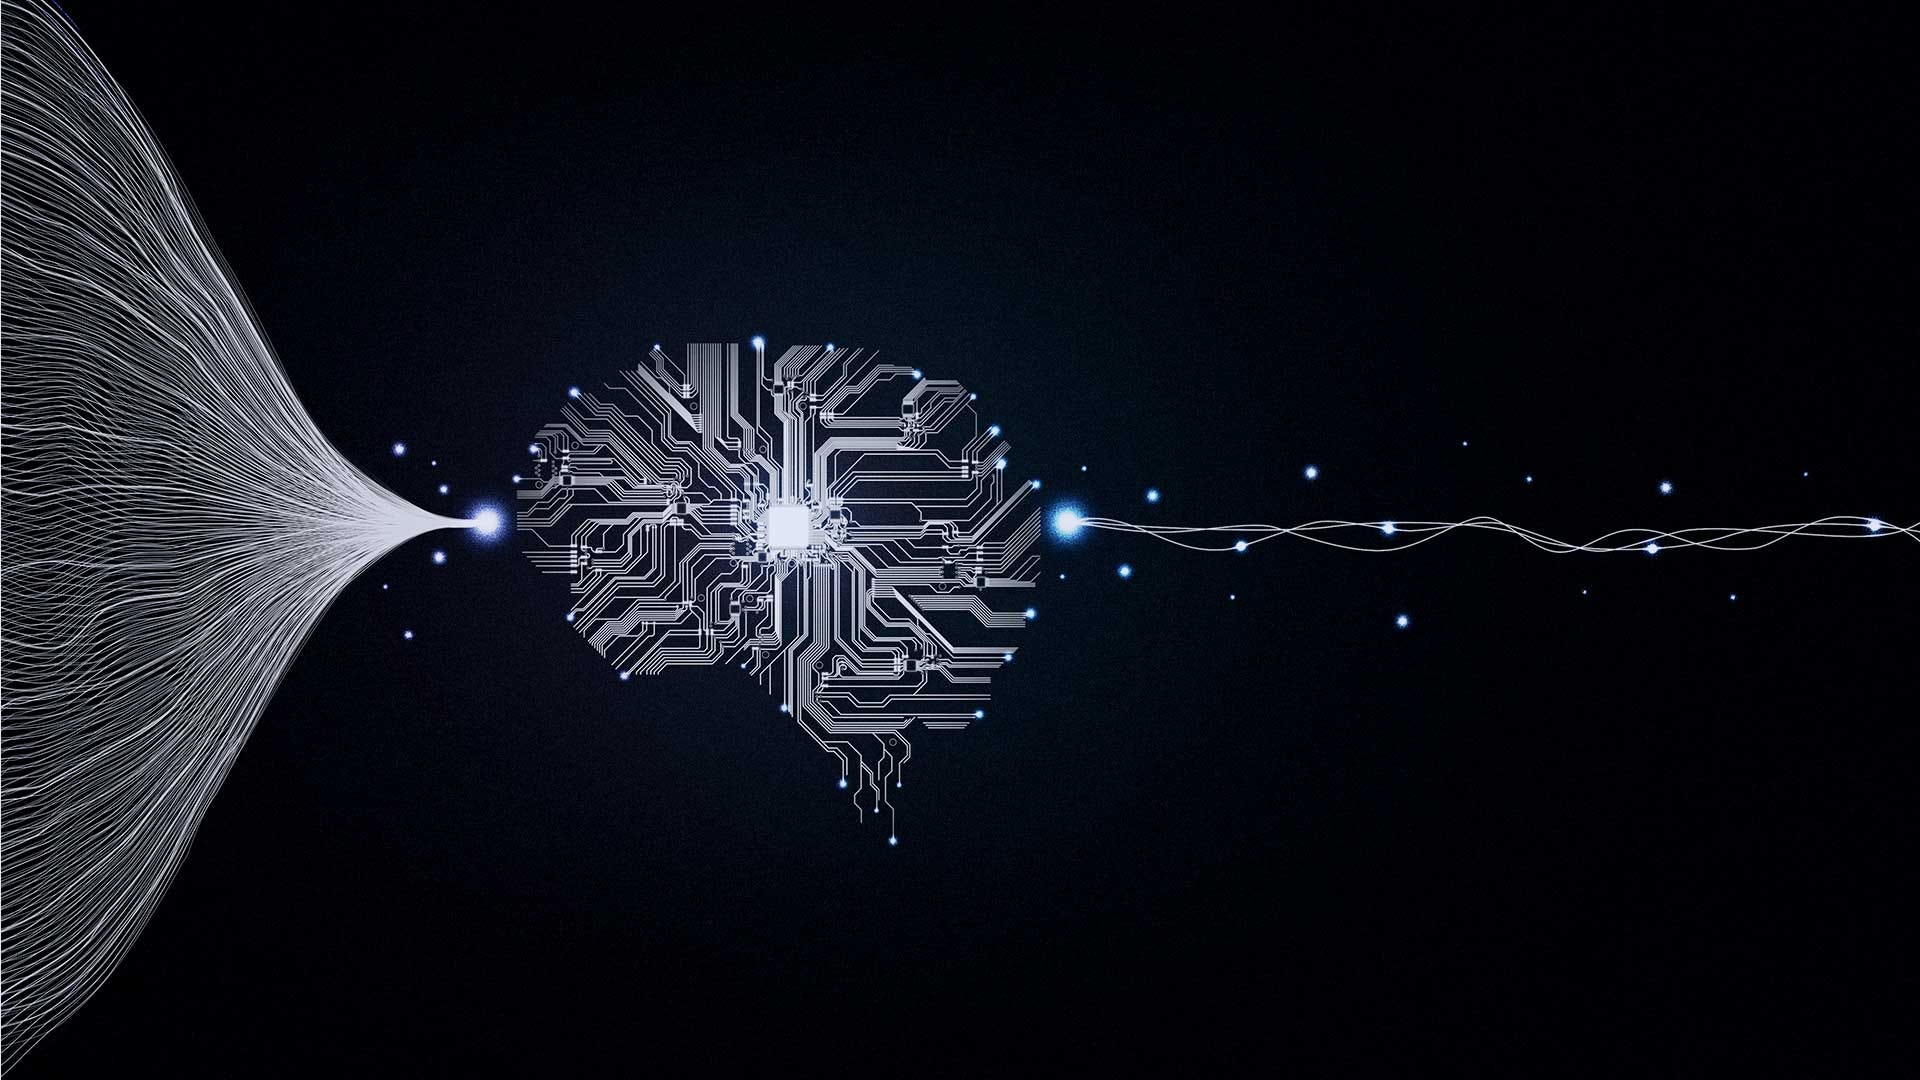 The future of AI: egalitarian or dystopian?